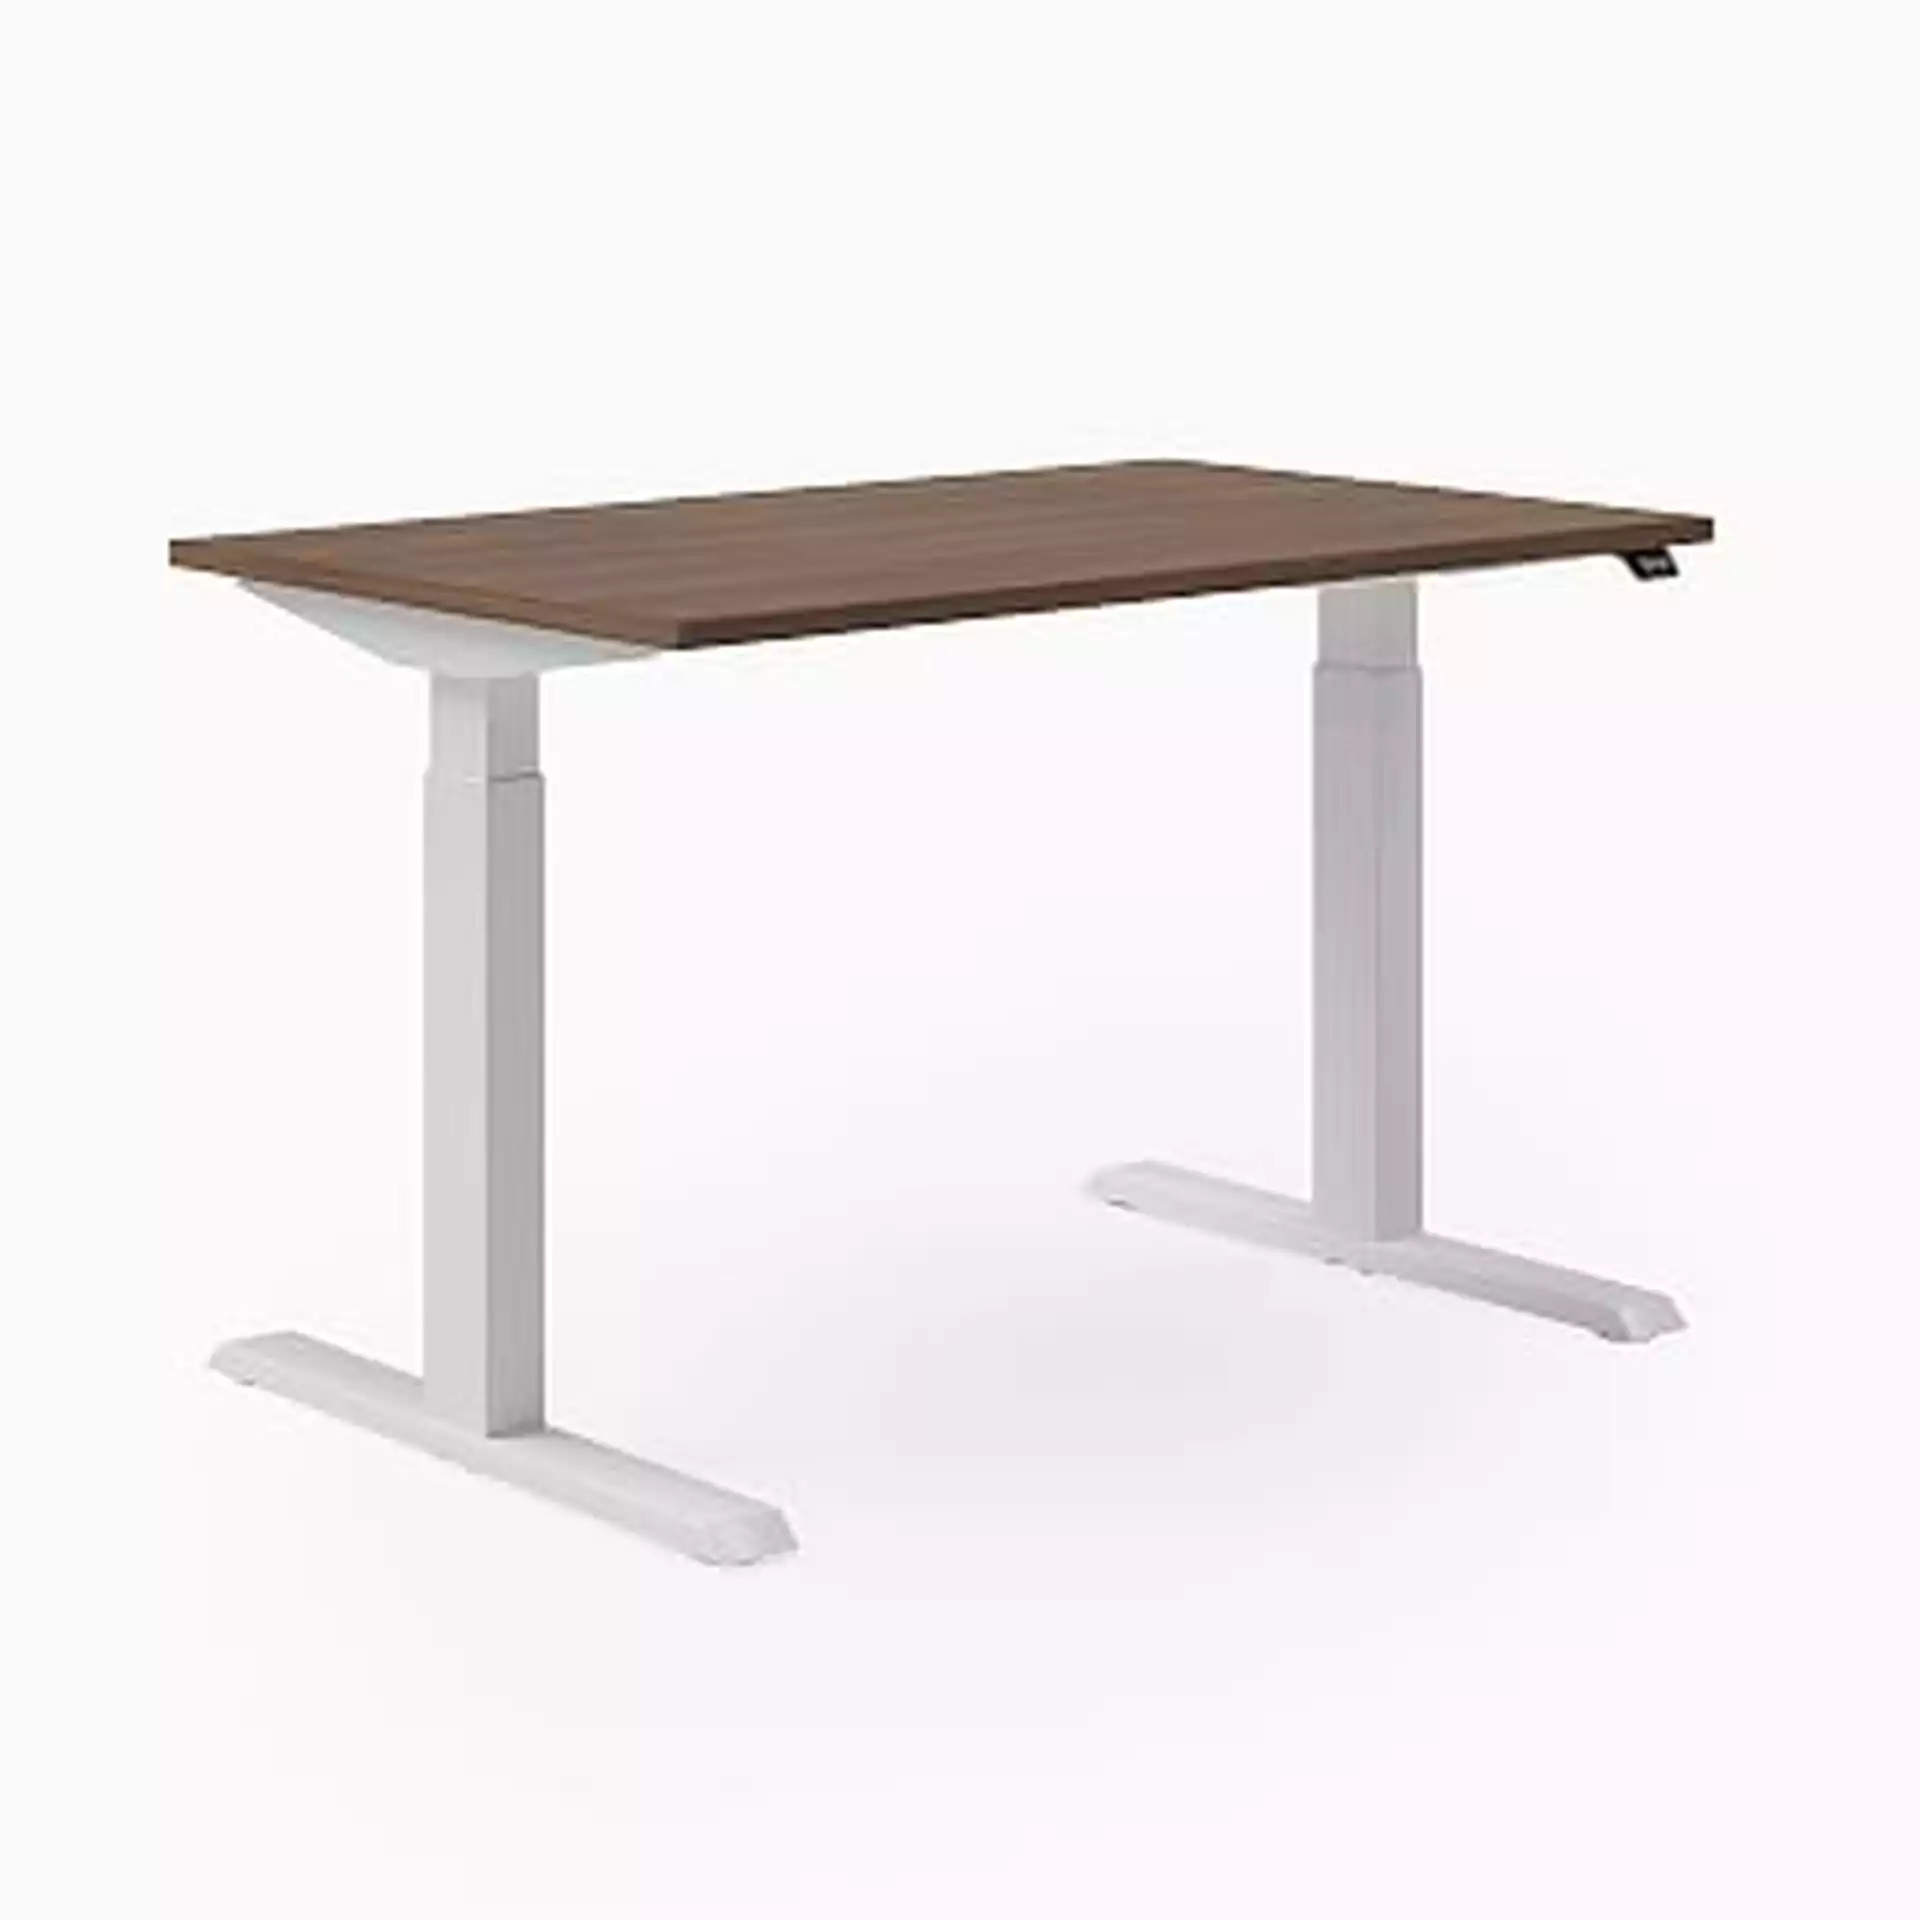 Steelcase Migration SE Height-Adjustable Desk, 23"x58", Virginia Walnut, Merle, Mitered Edge Foot